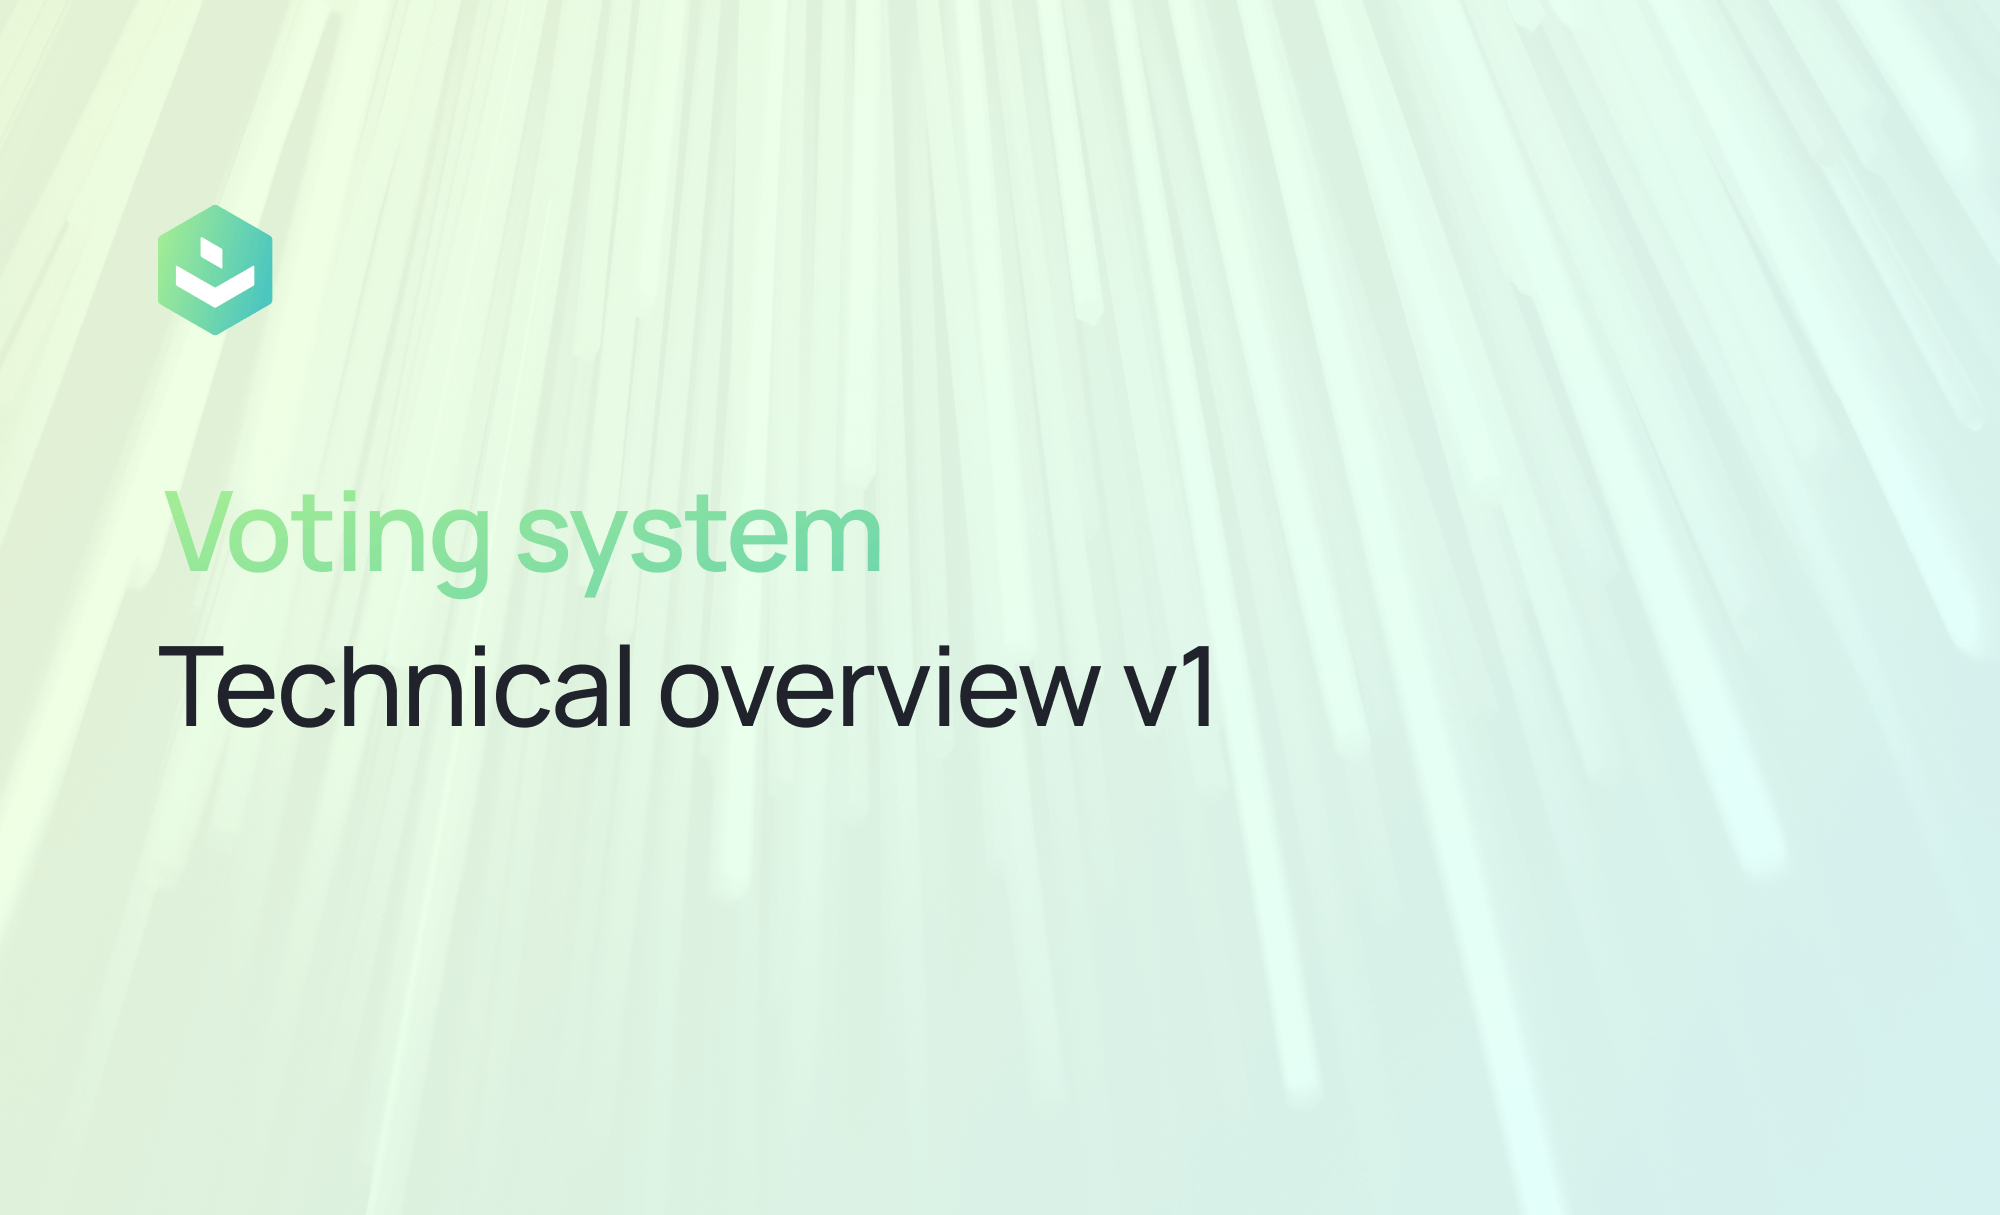 Vocdoni, voting system technical overview v1